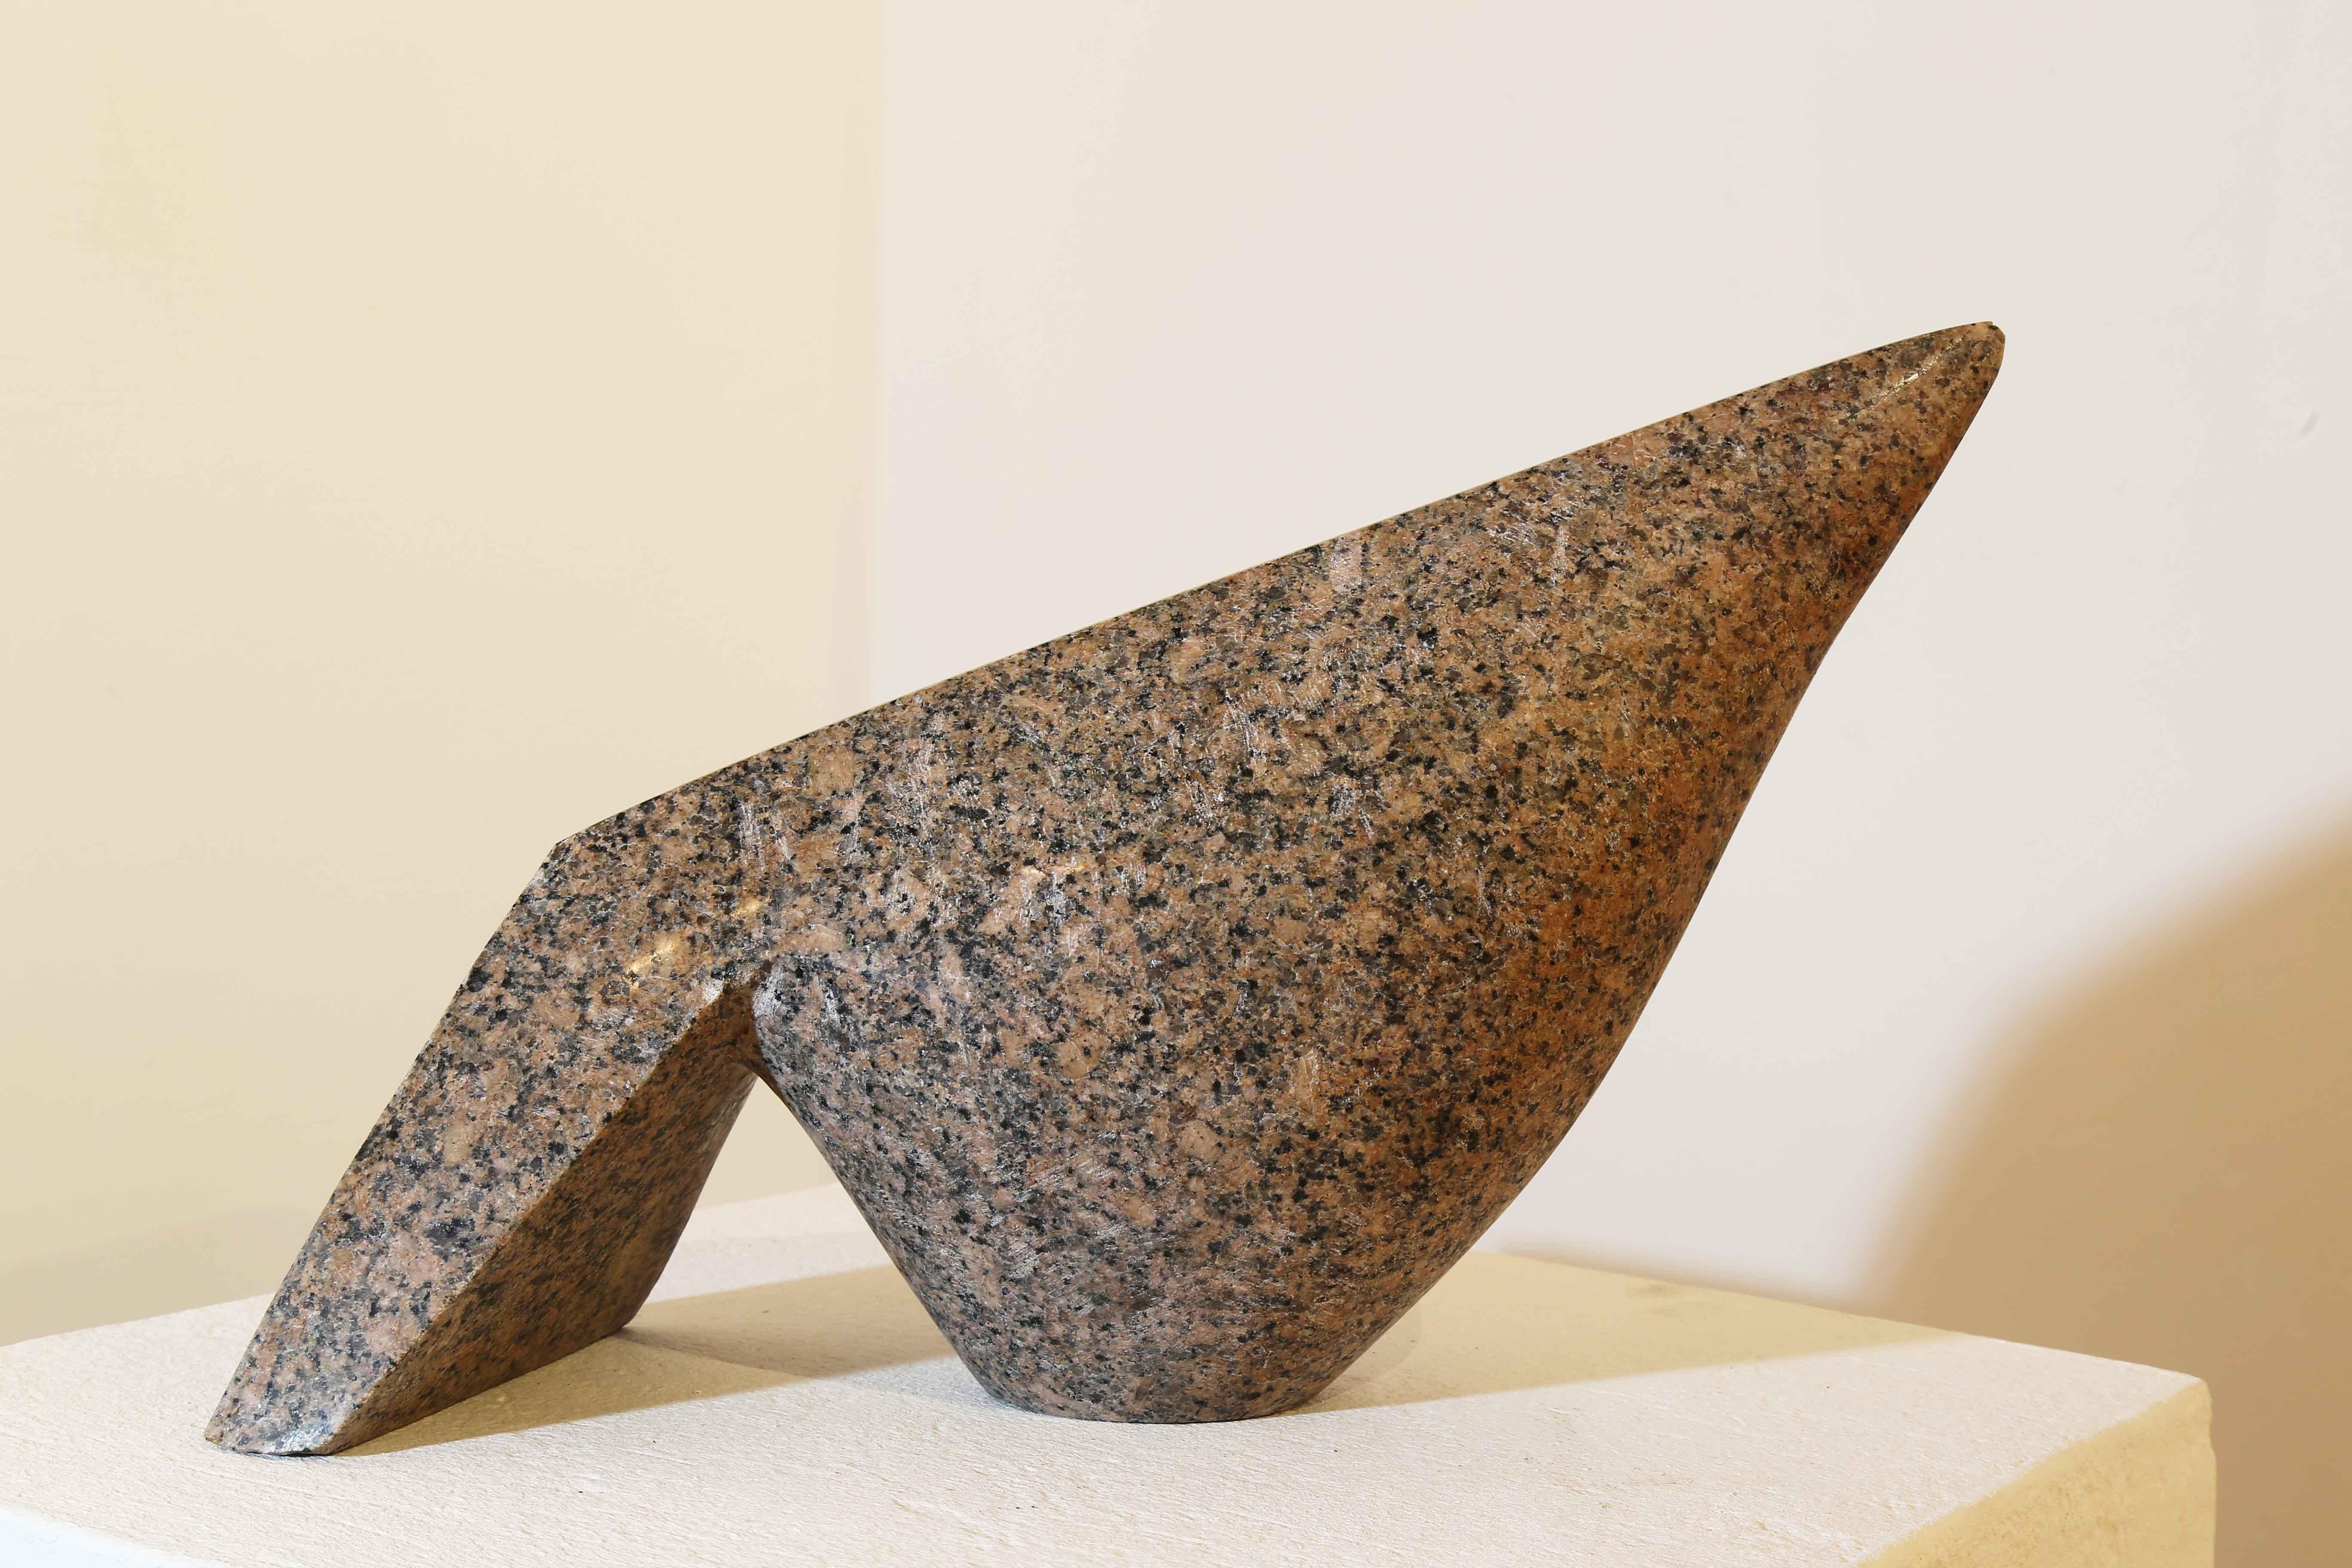 "The Pigeon" Red Granite Sculpture 10" x 14" x 5" inch by Eman Barakat